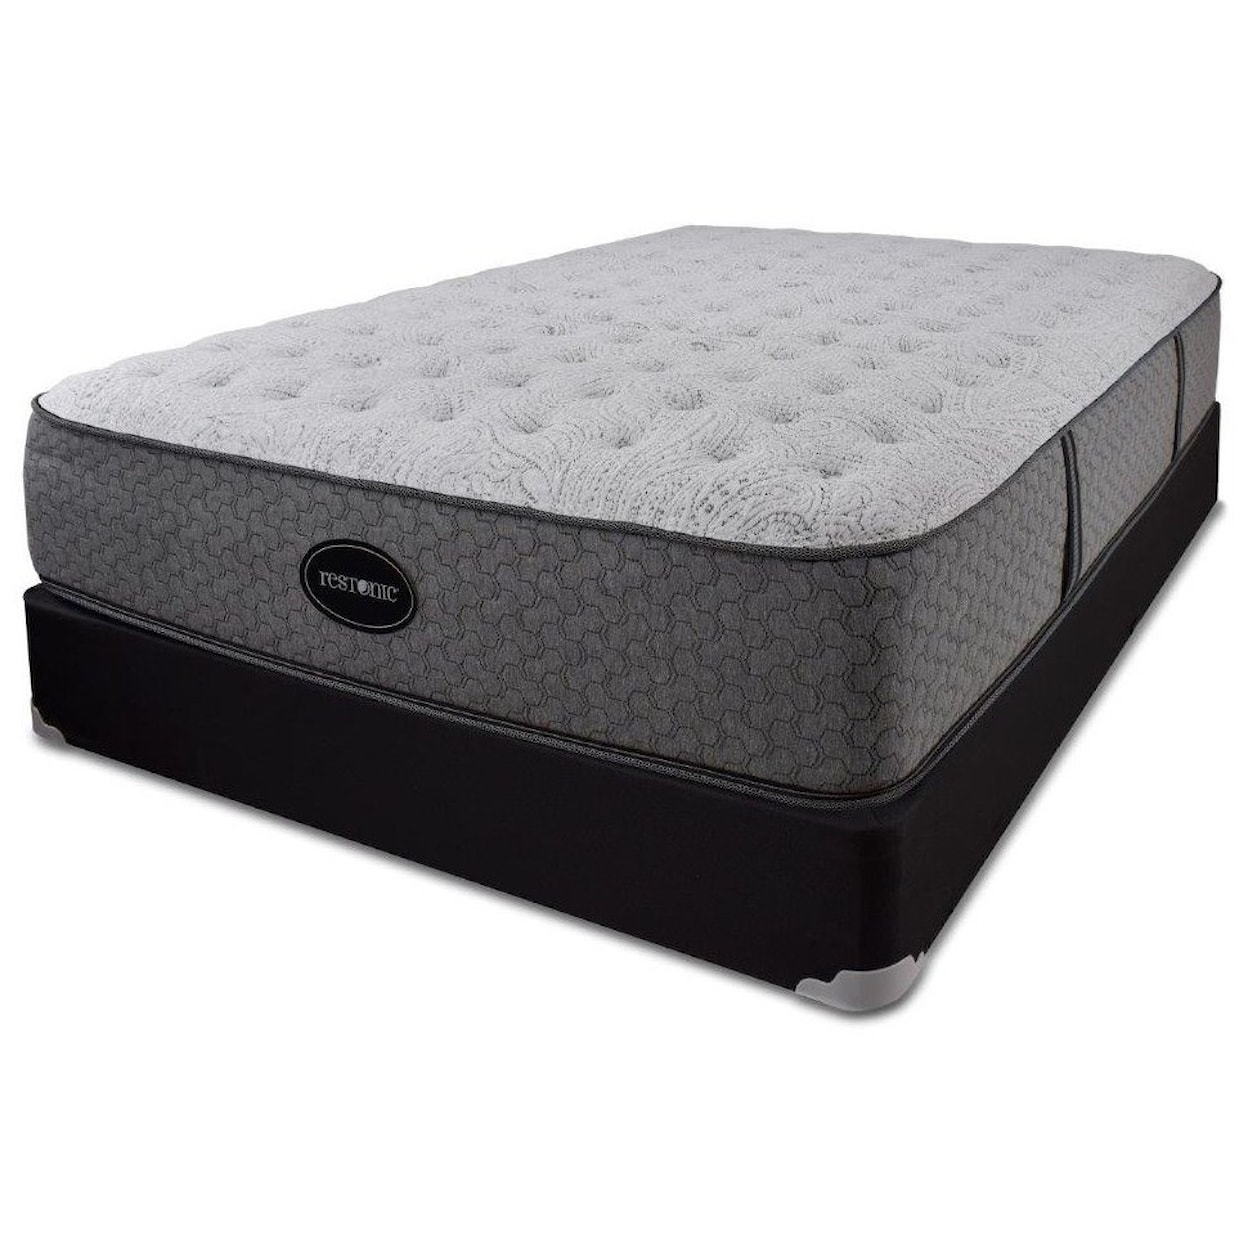 Restonic Blackcomb Cushion Firm King Comfort Firm Low Profile Set